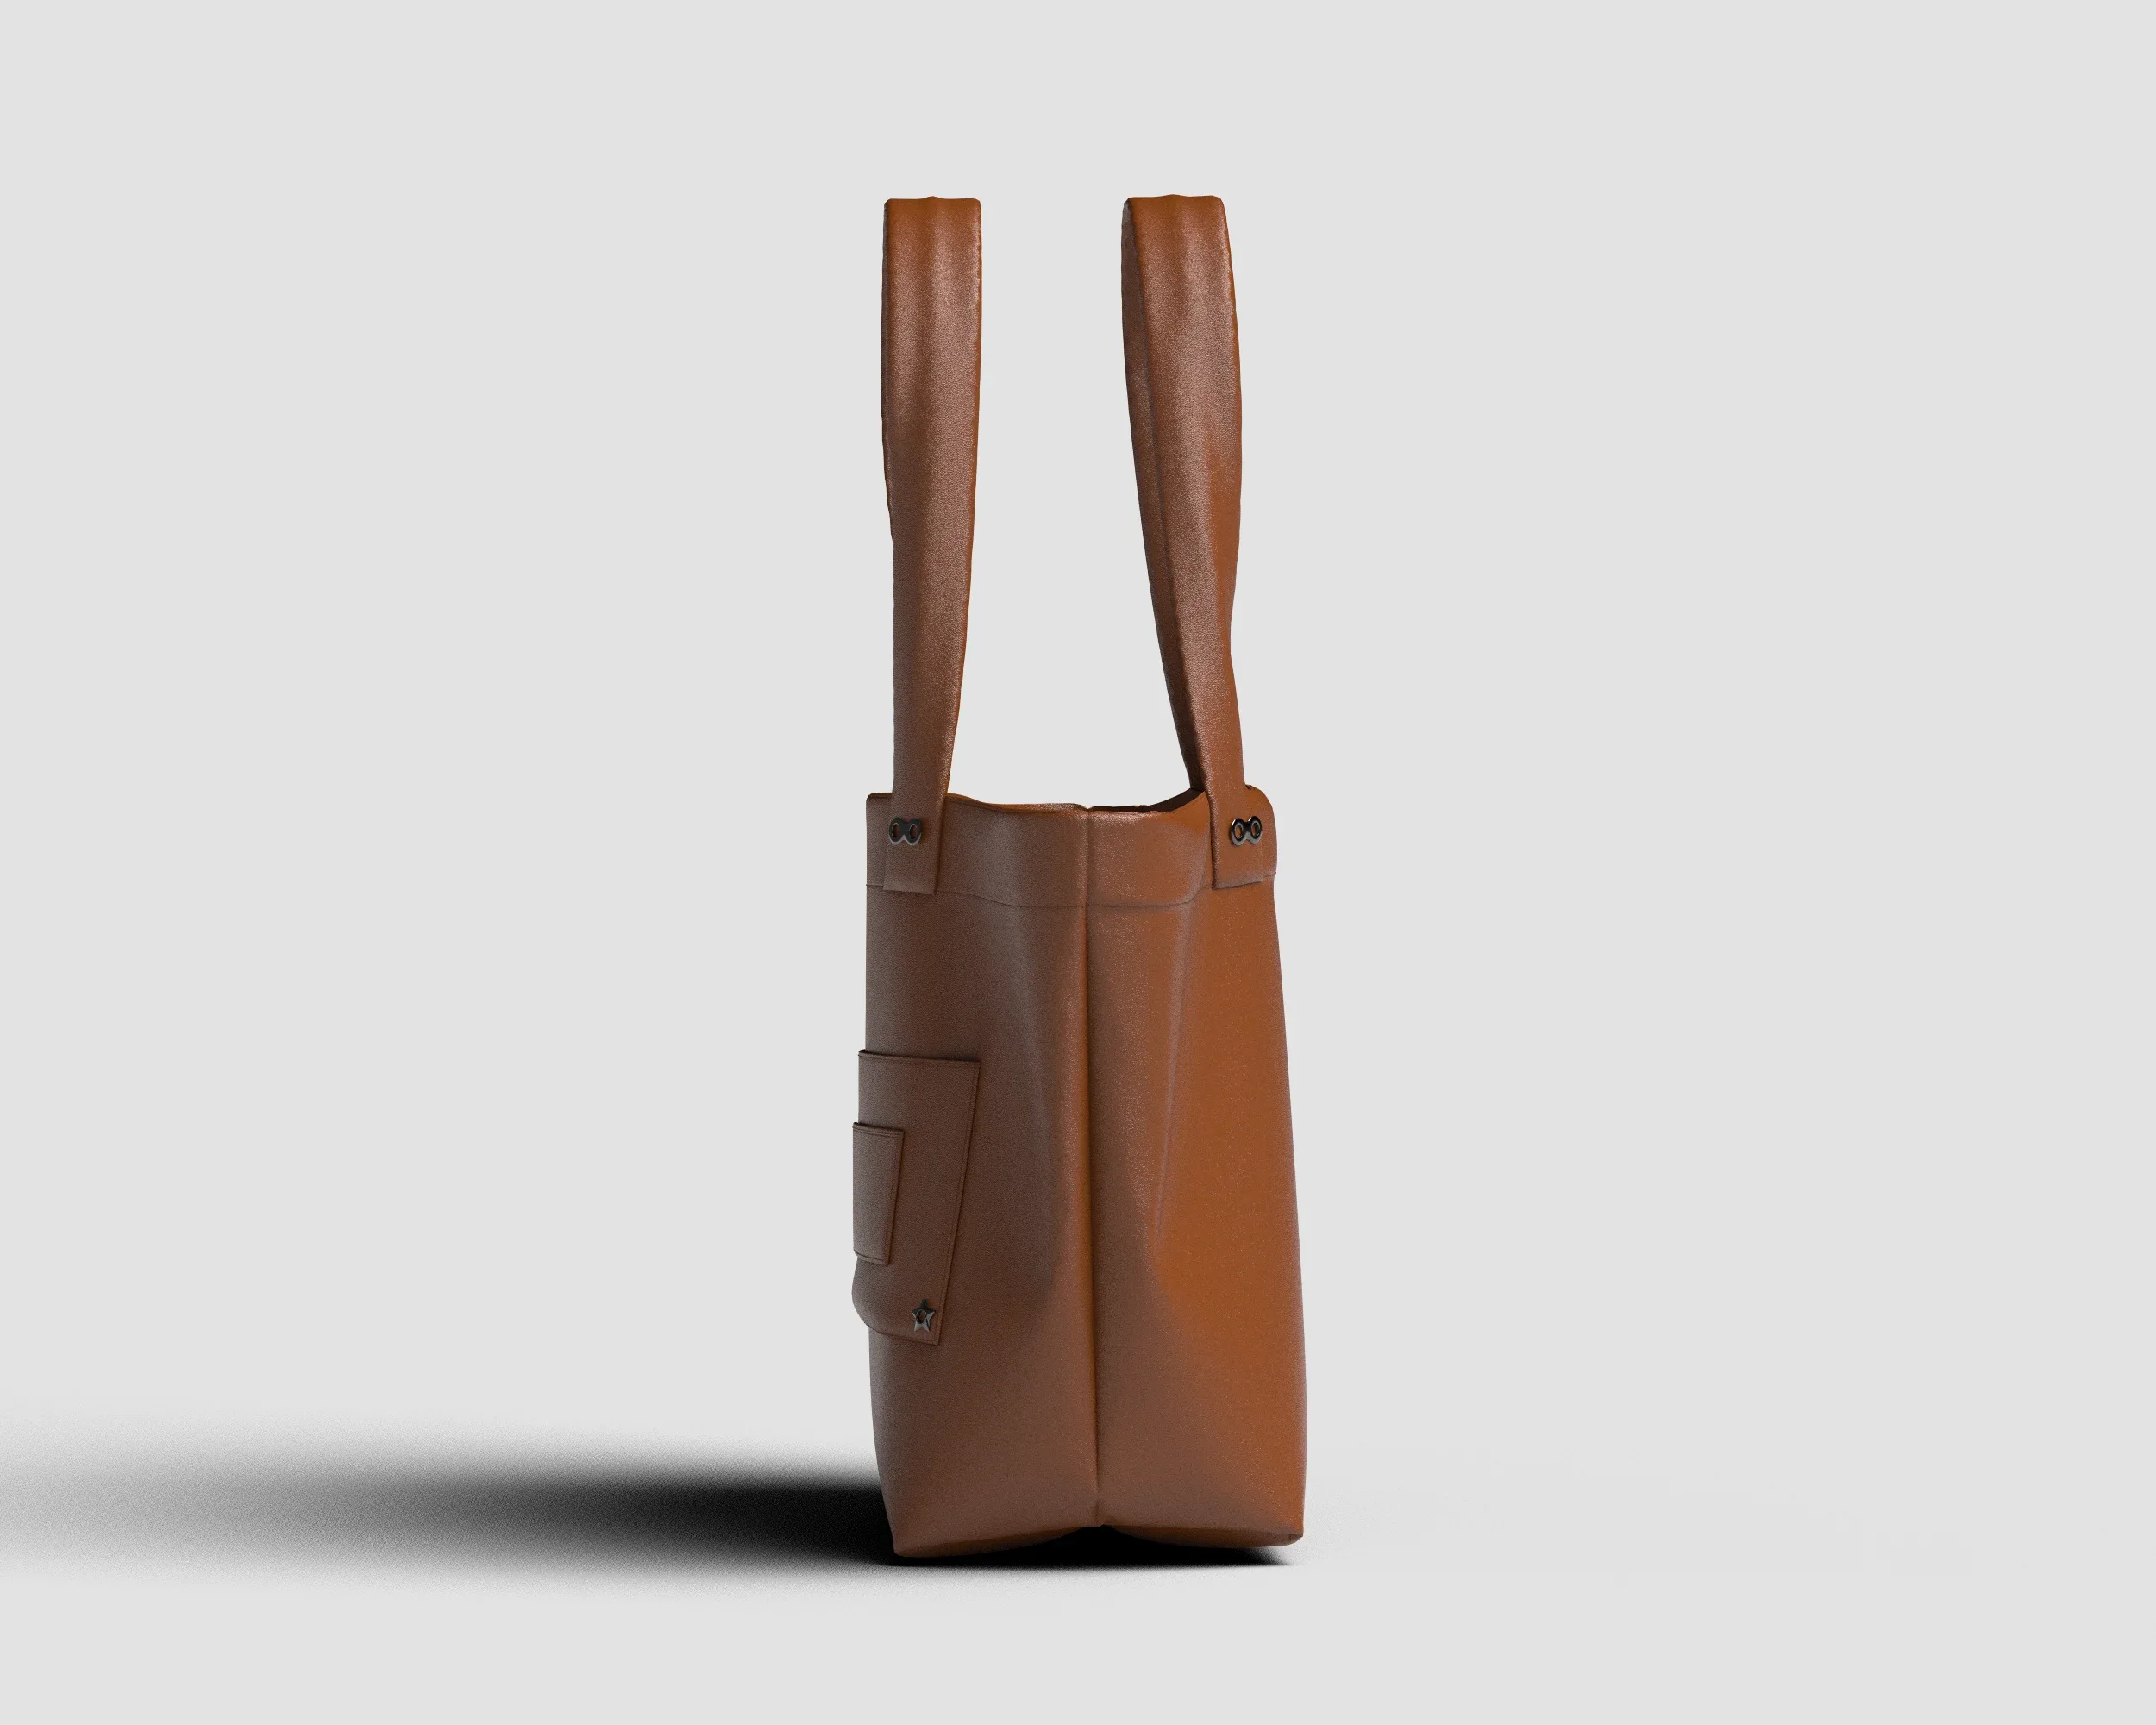 Leather Hand Bag | Marvelous / Clo3d / obj / fbx